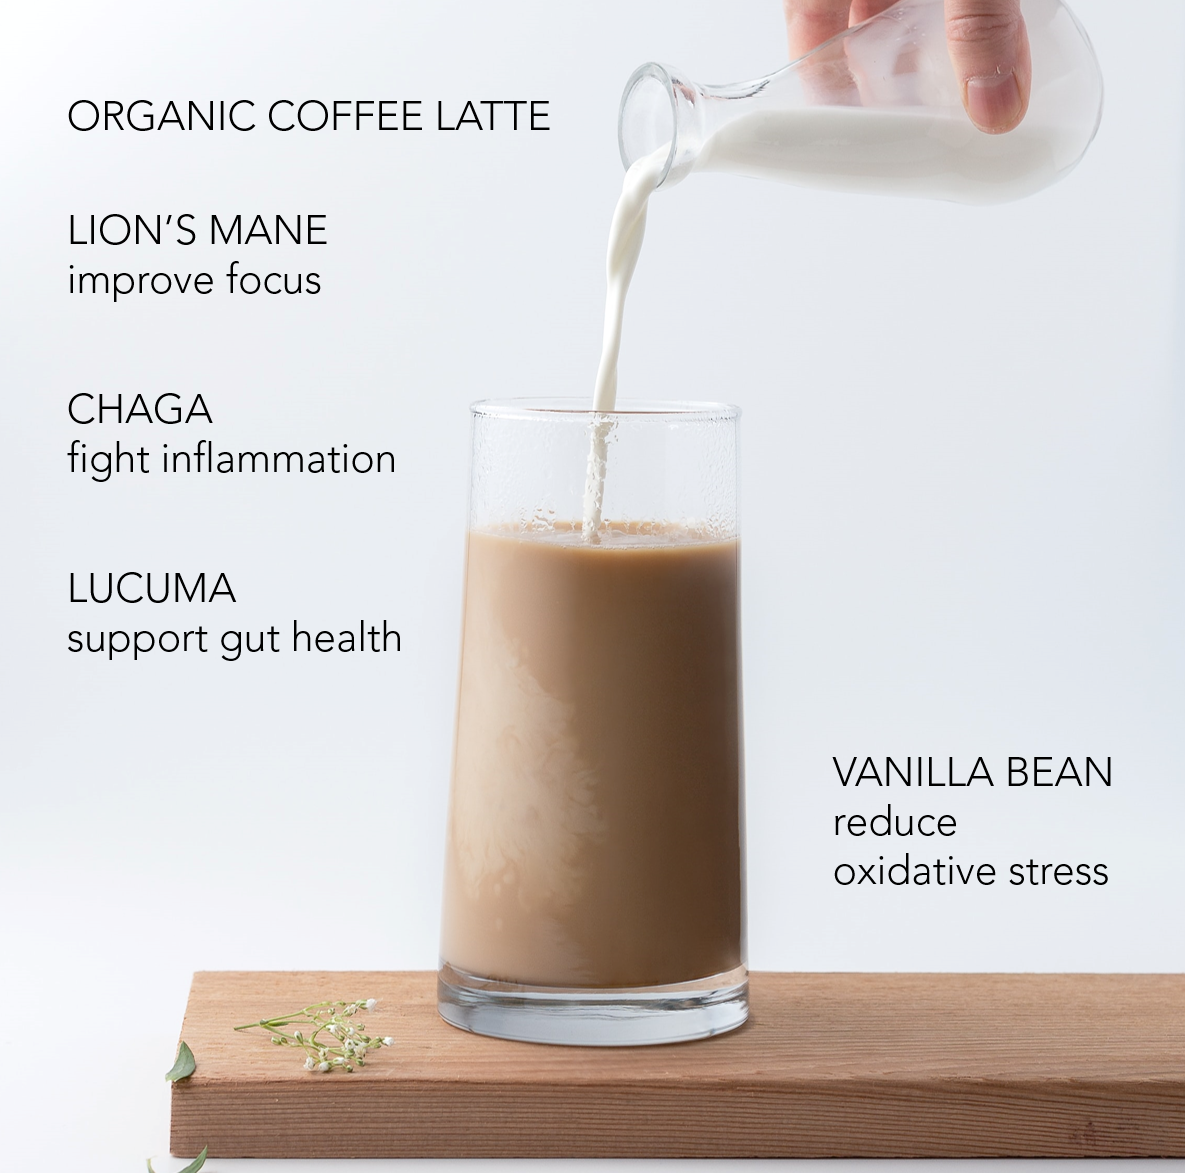 TUSOL Organic Latte Kit by TUSOL Wellness